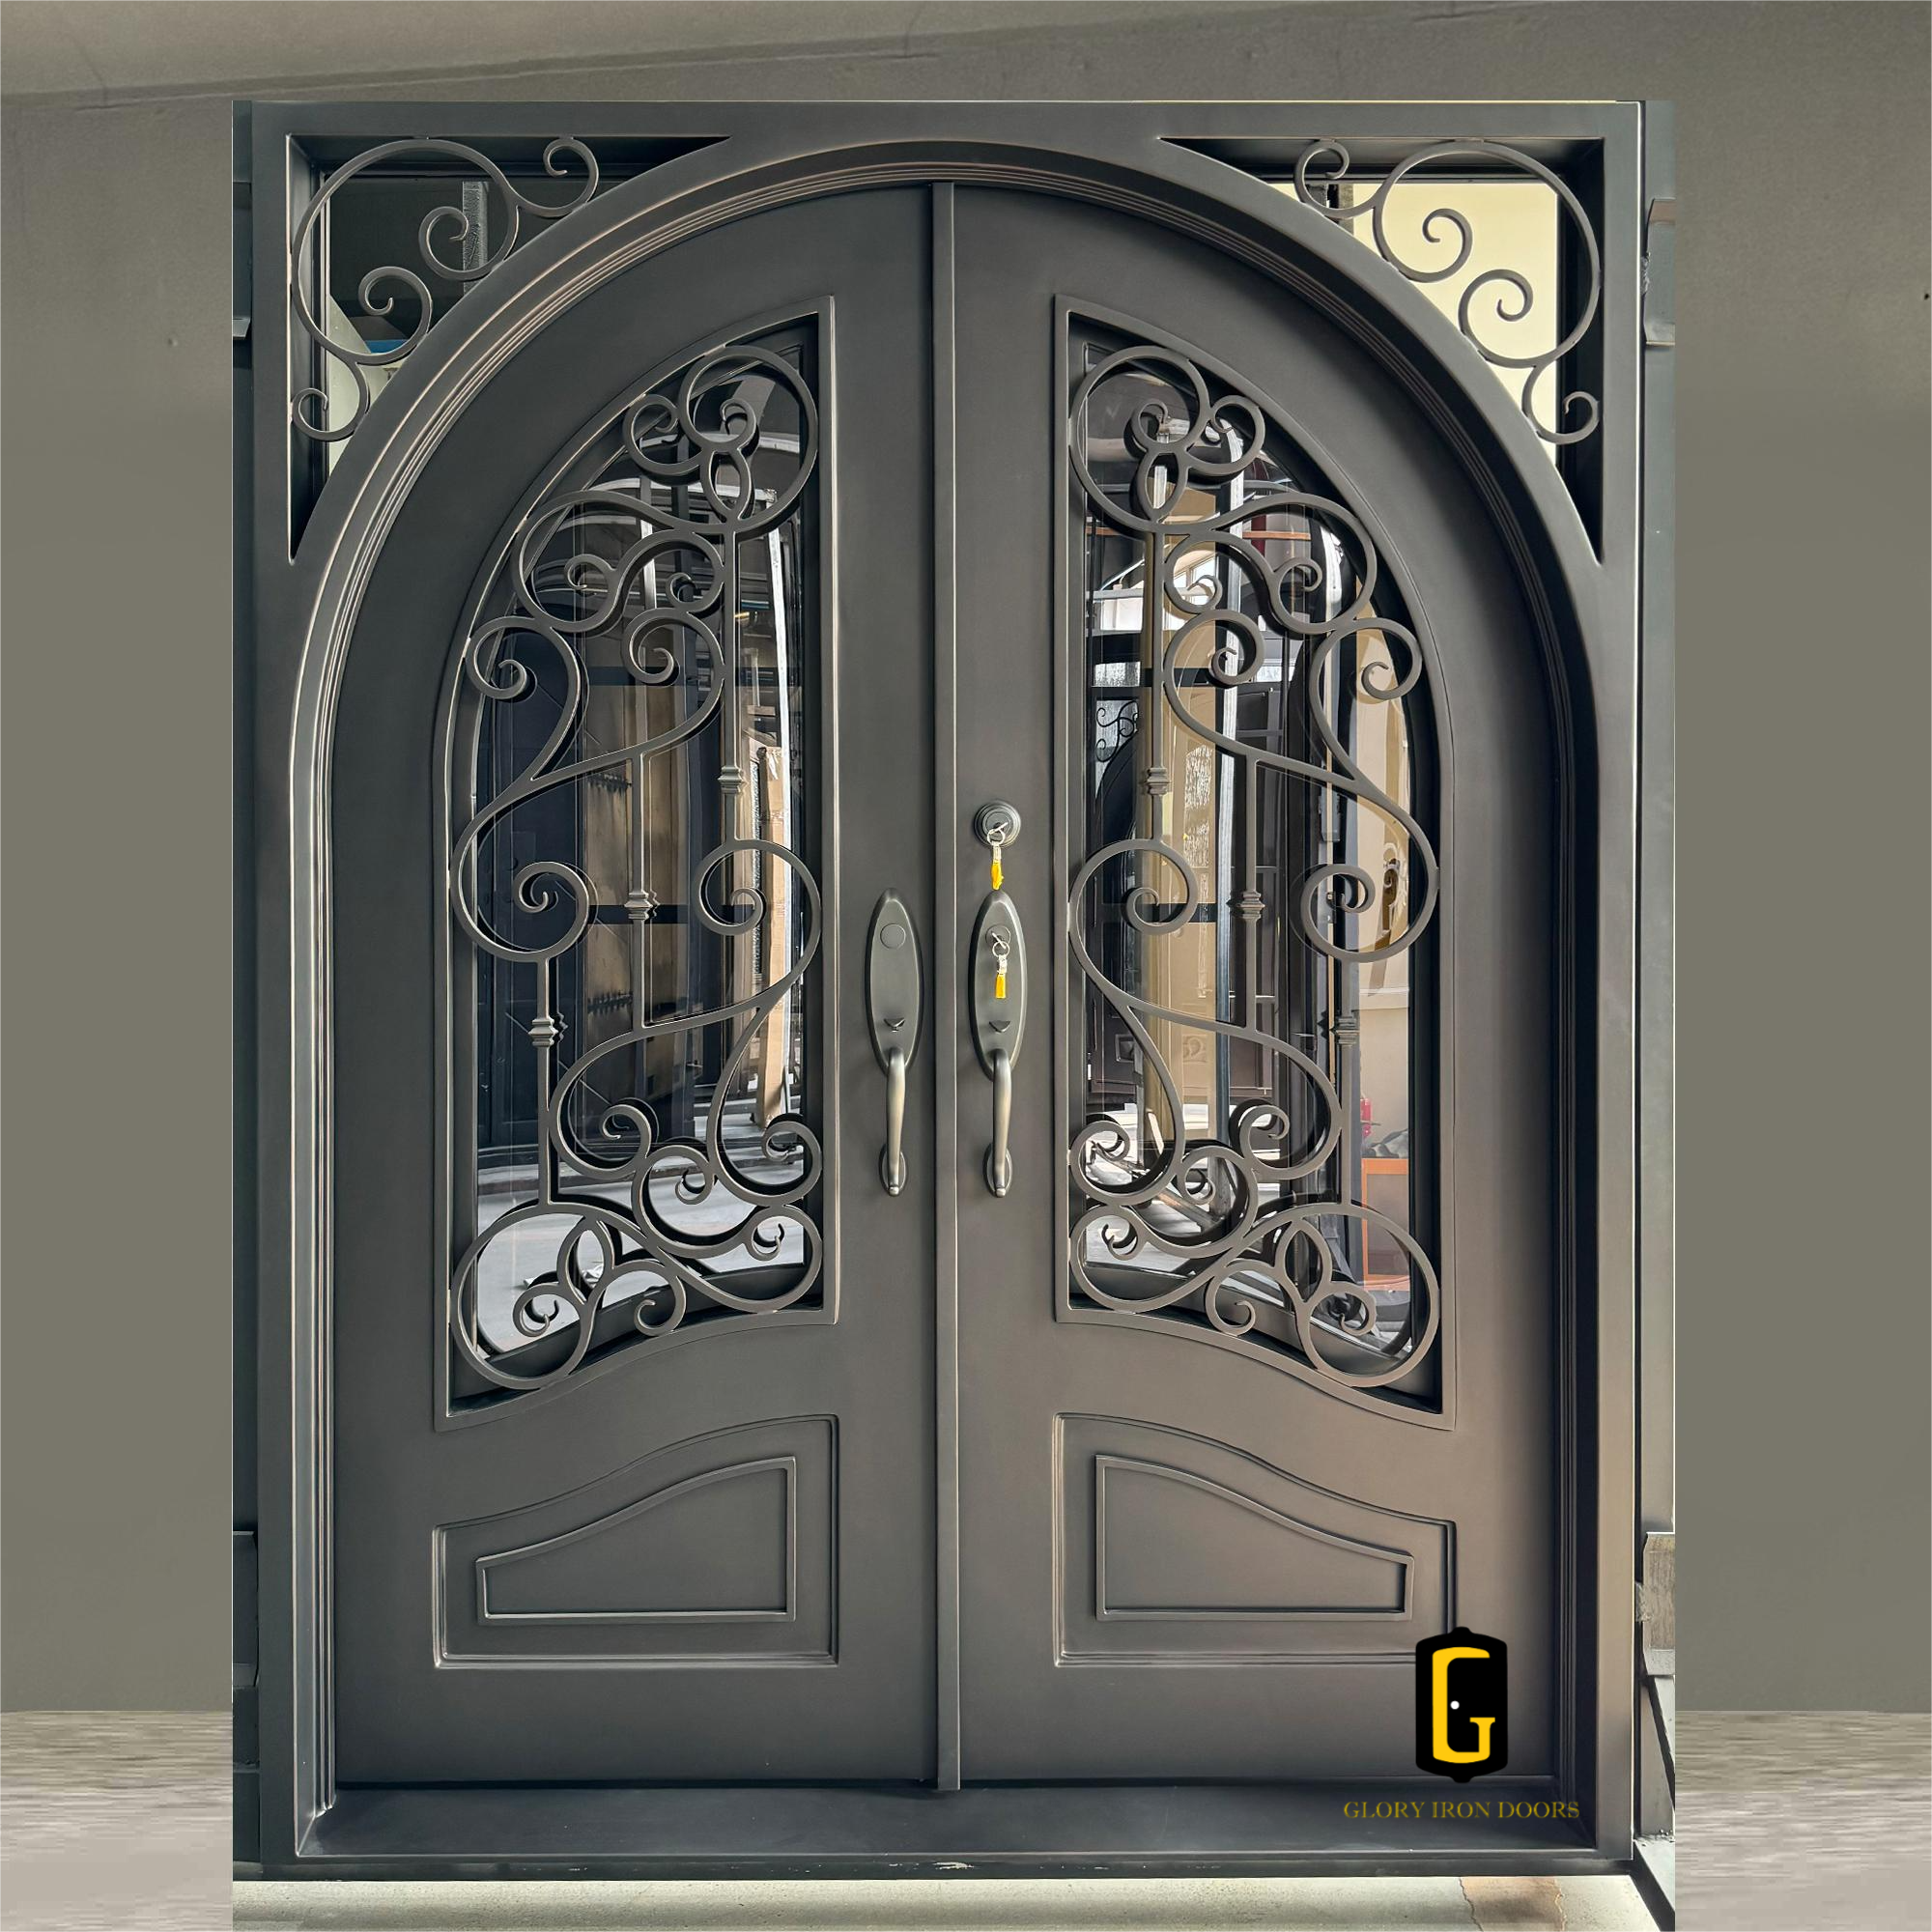 gloryirondoors custom made iron double door with two deadbolts